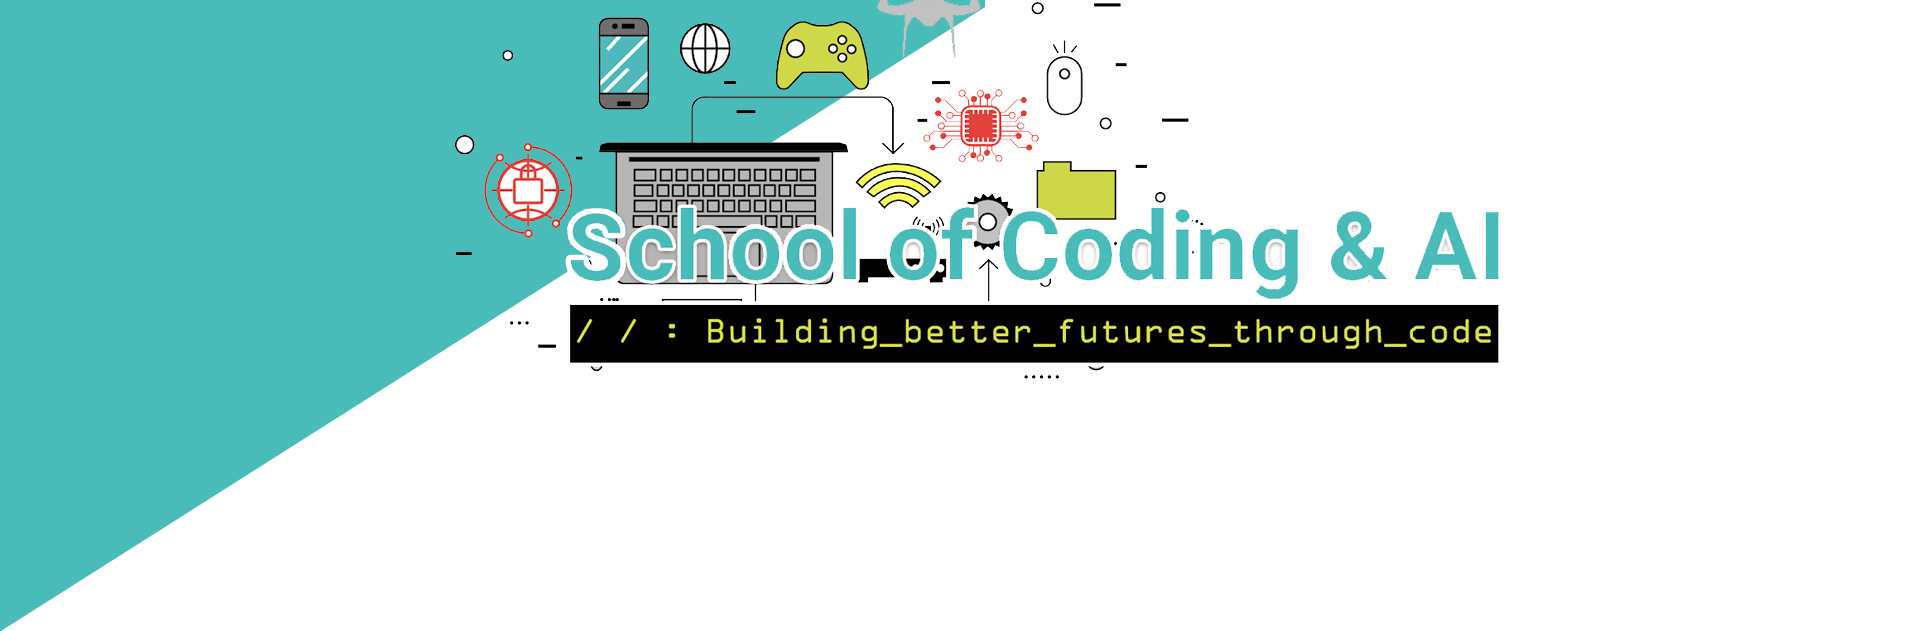 School of Coding & AI